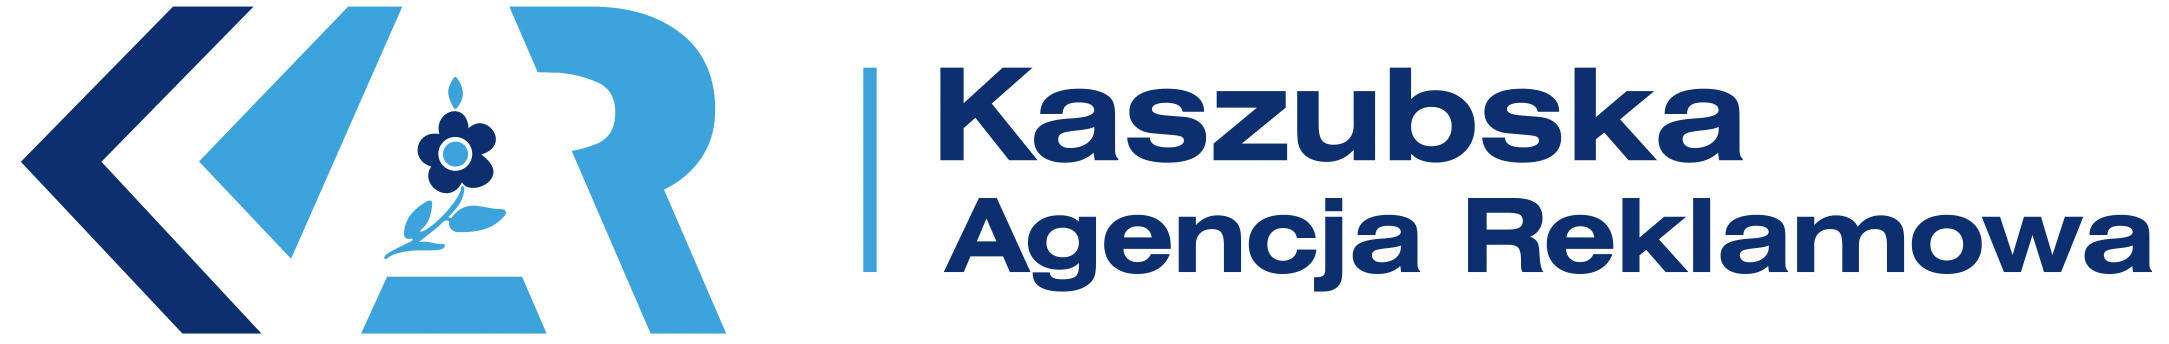 ReklamaKaszuby.pl - Kaszubska Agencja Reklamowa